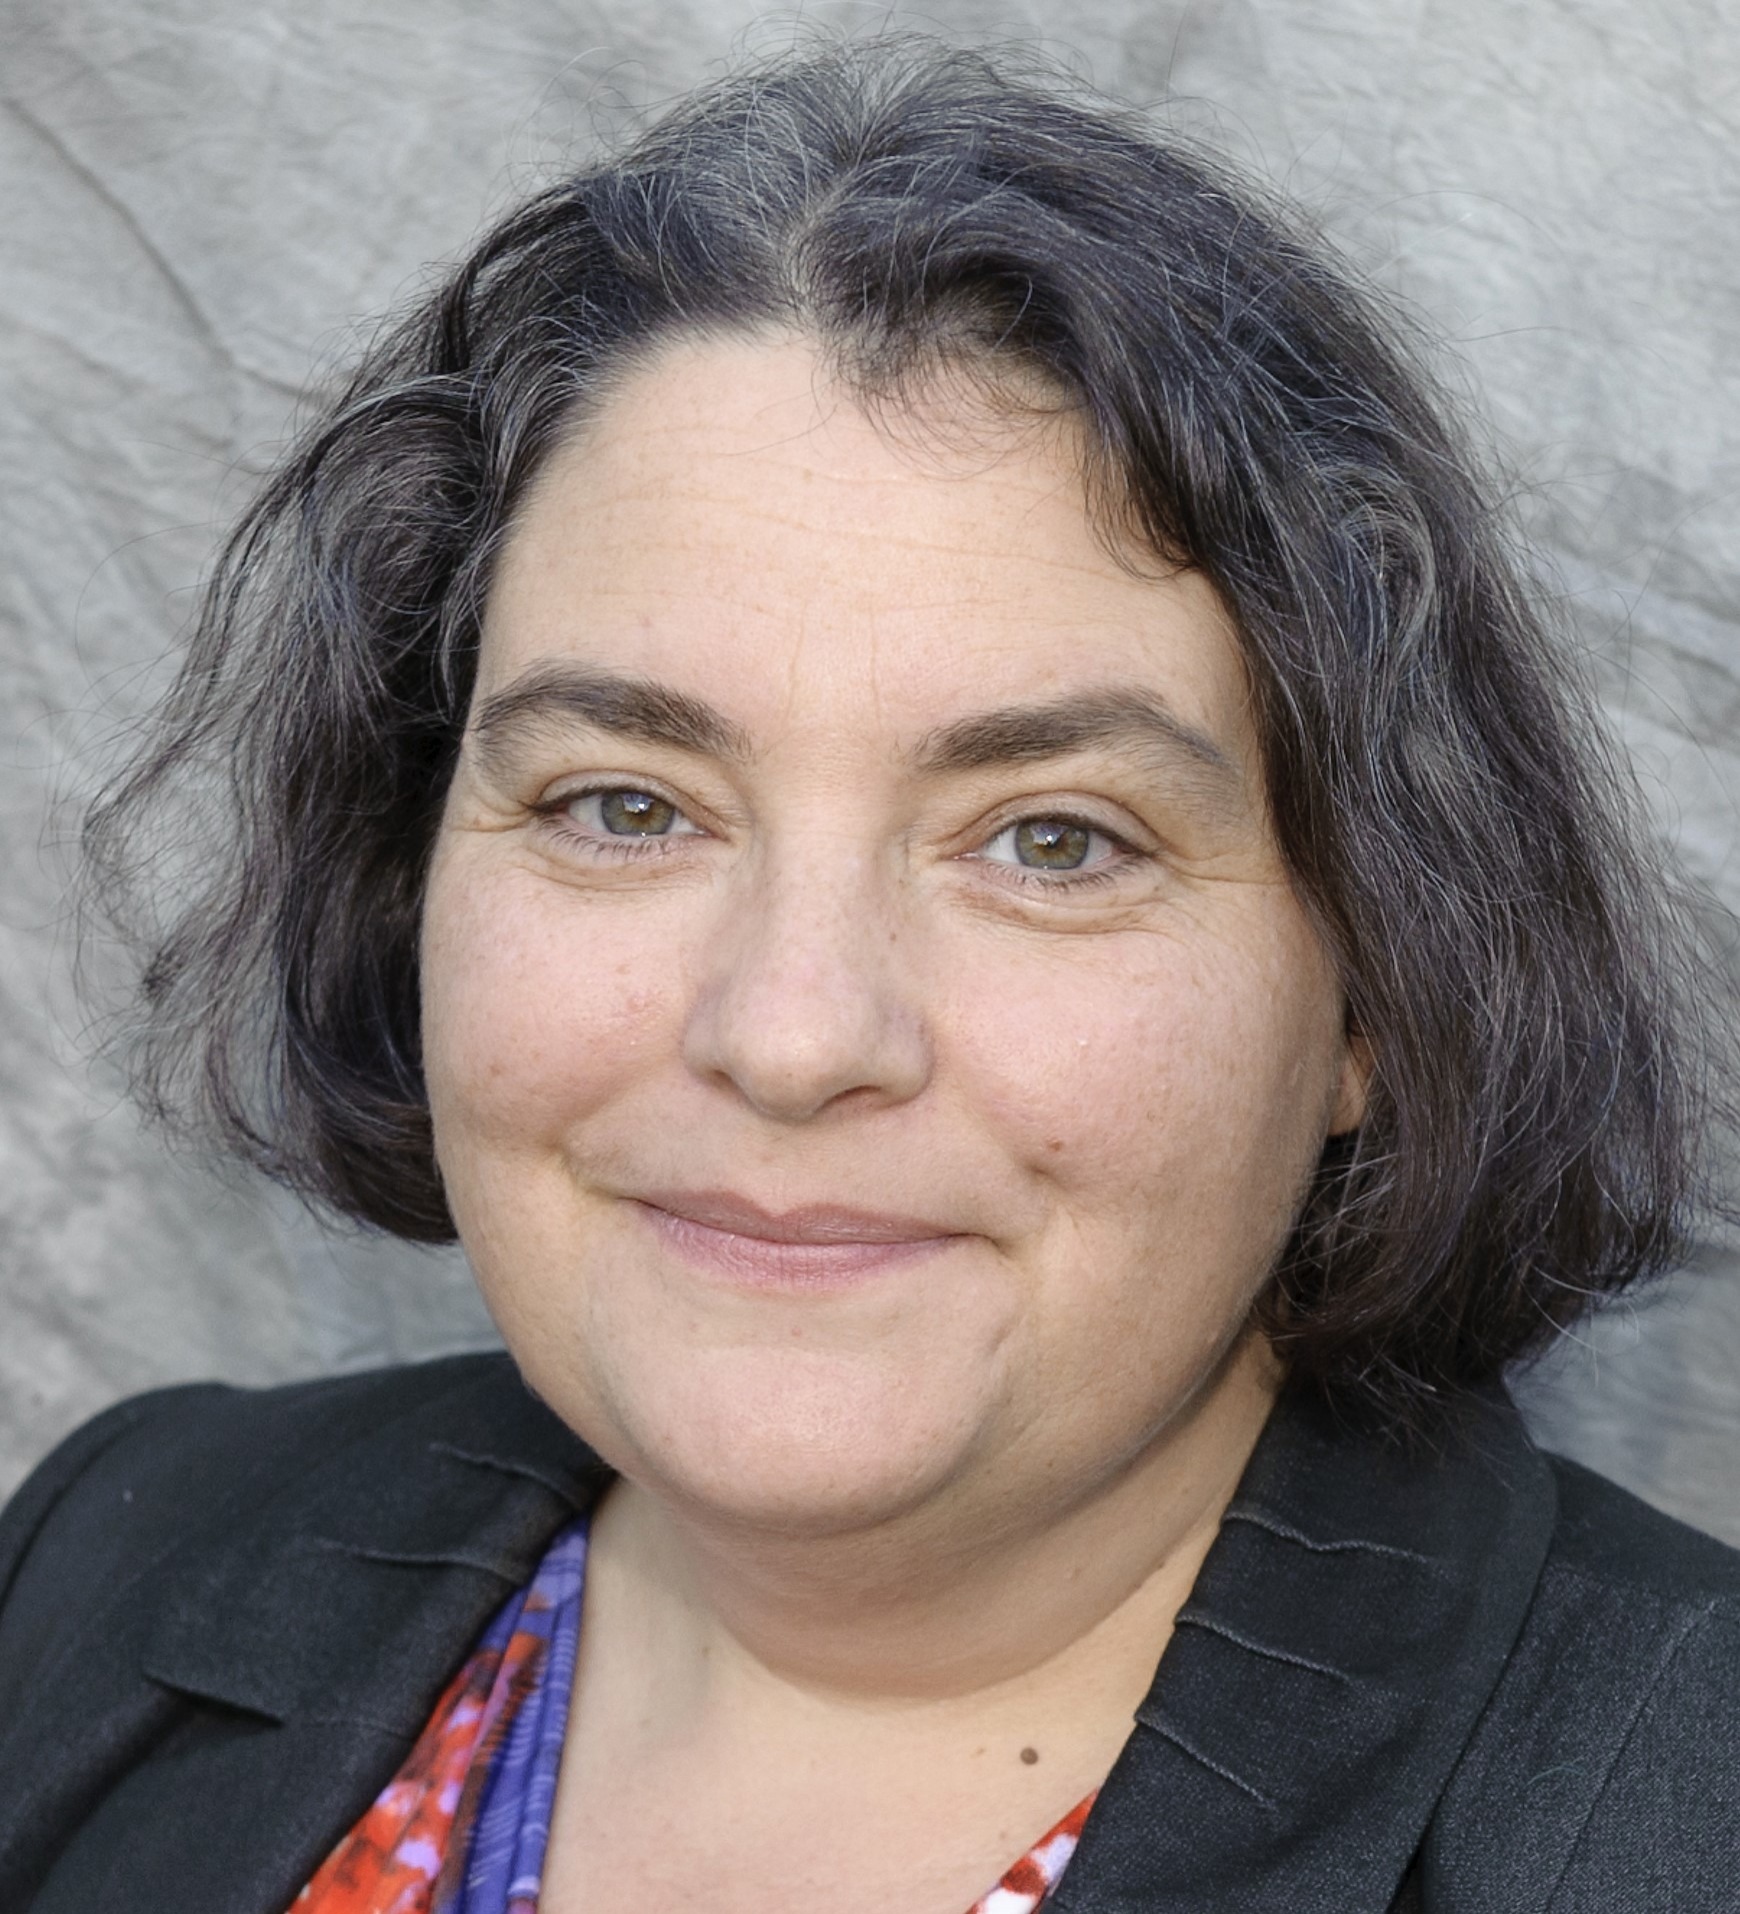 Kathleen Gasparian's Profile Image